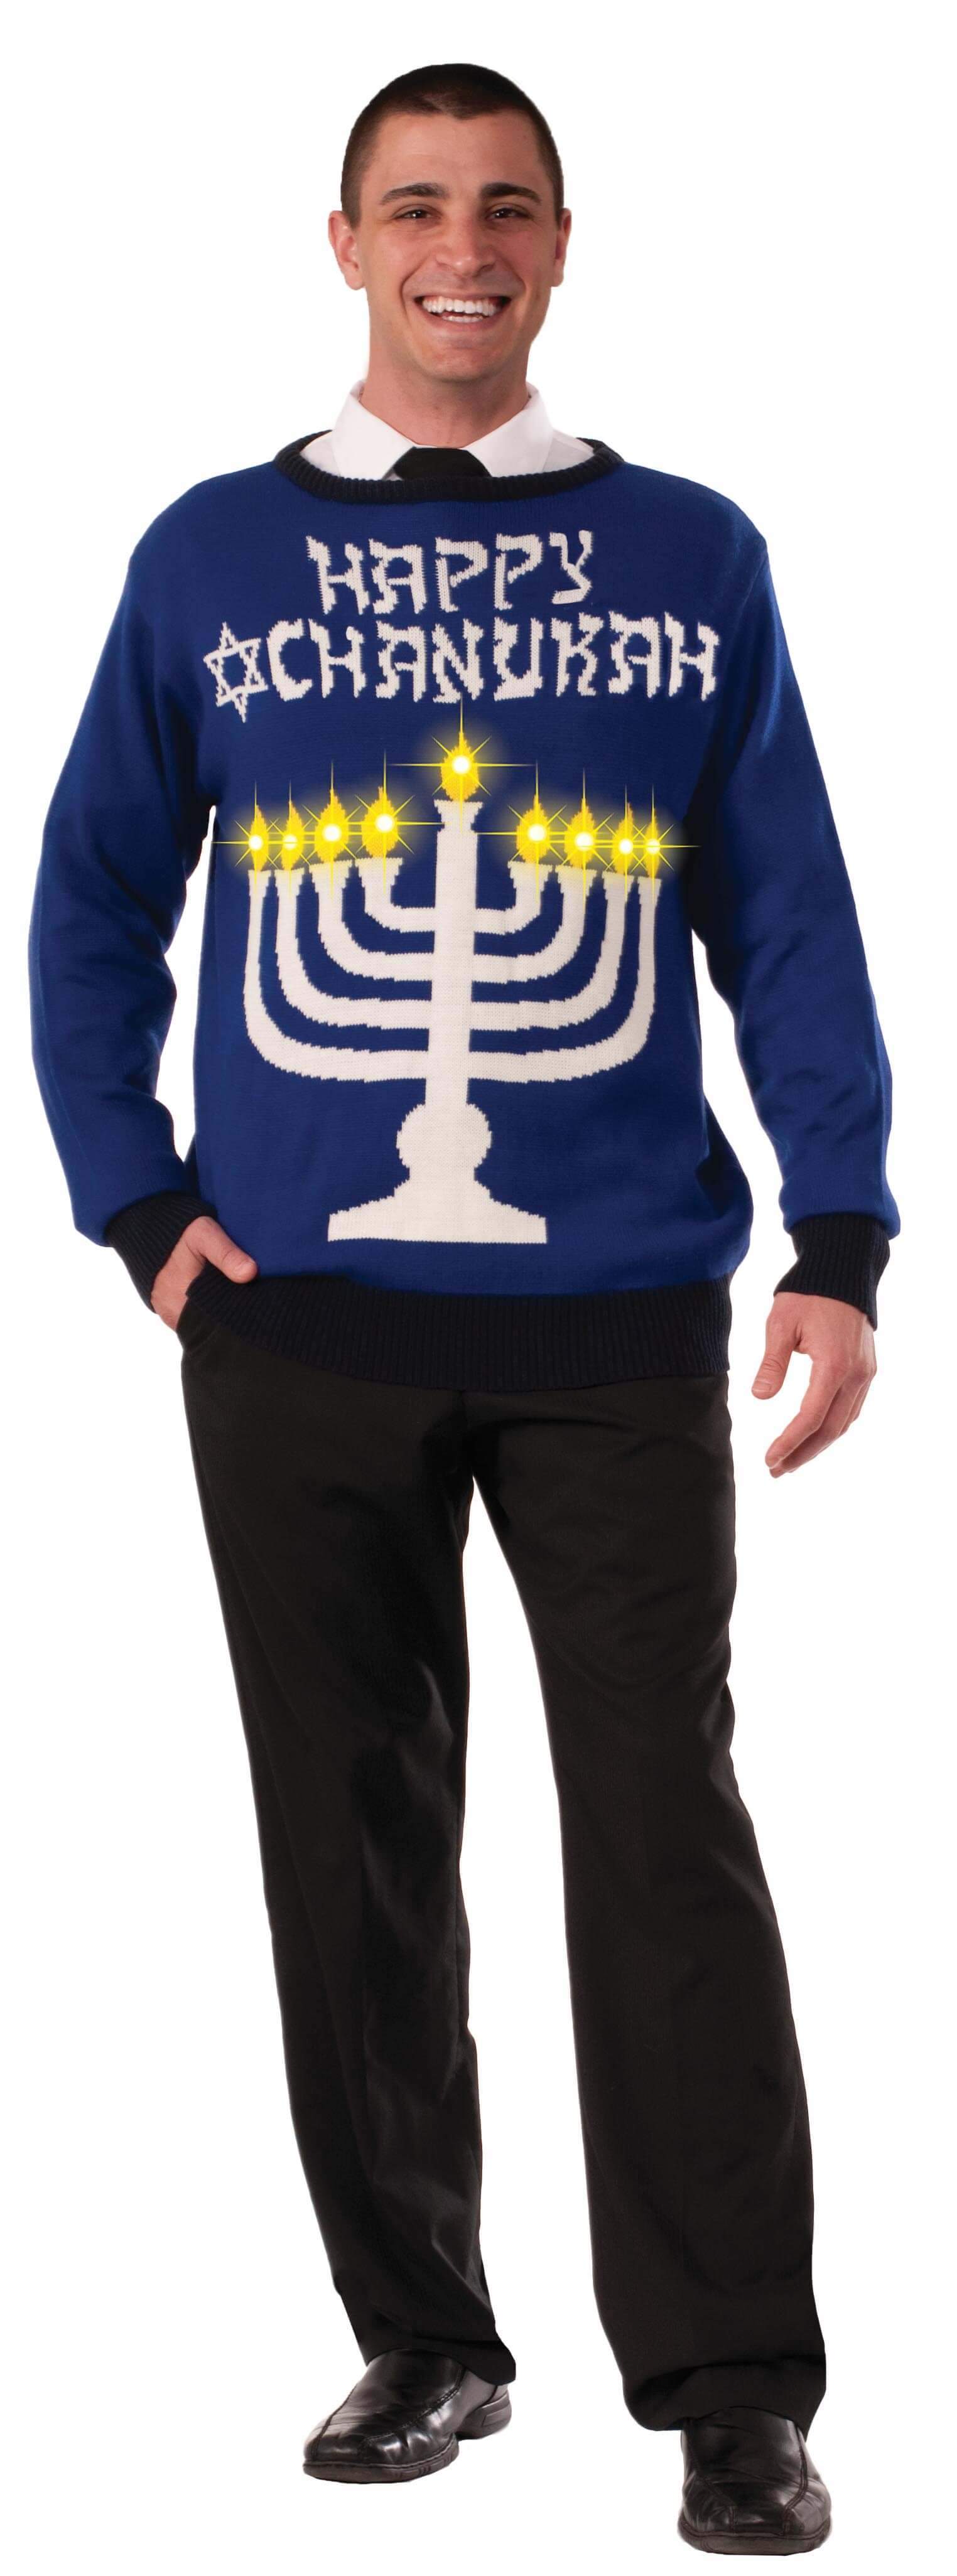 Other Sweaters Men's Lite-Up Menorah Chanukah Sweater